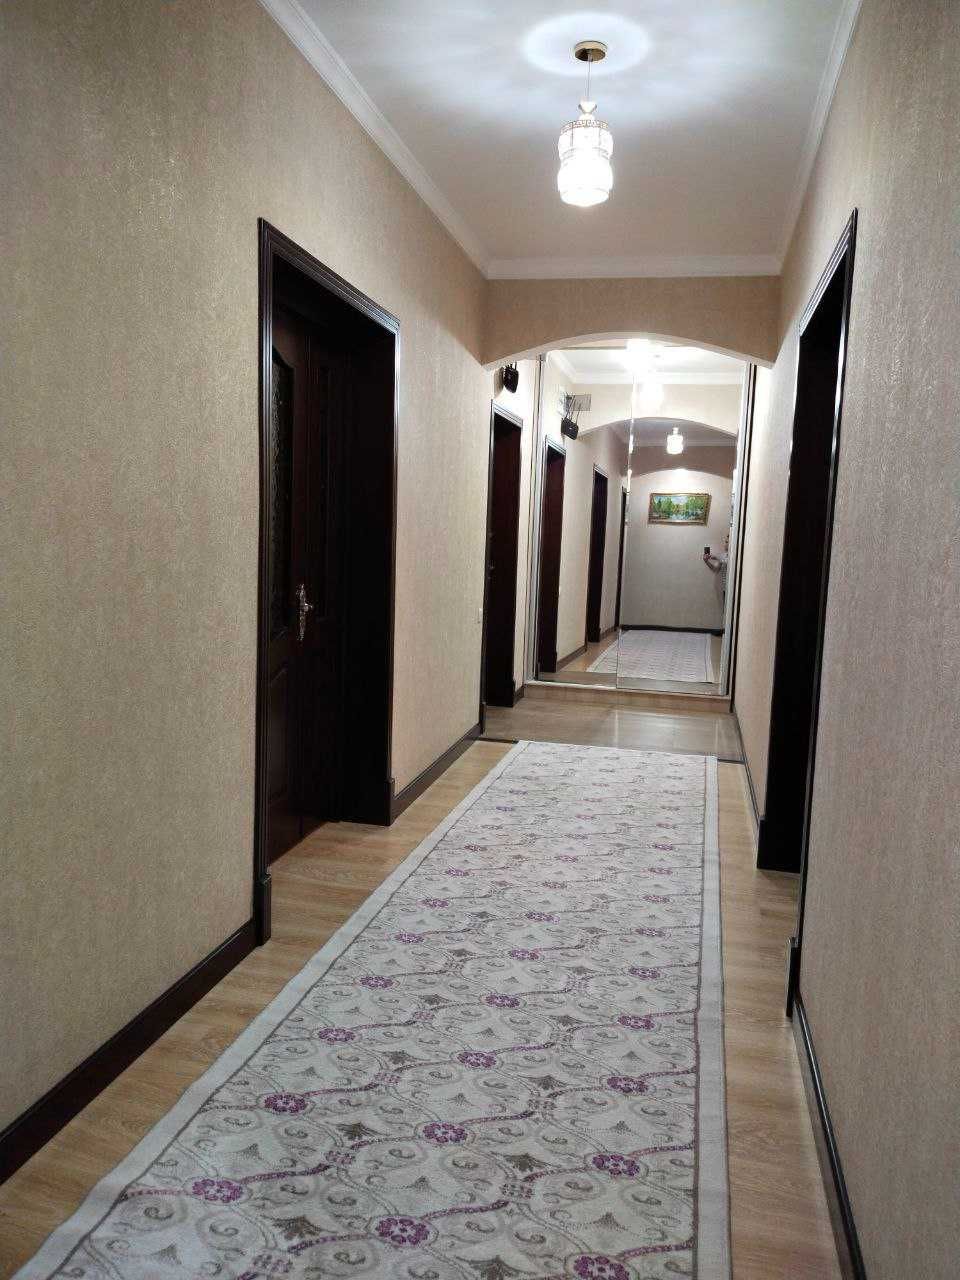 Сдаётся квартира на Юнусабад
Ориентир-метро Туркистан